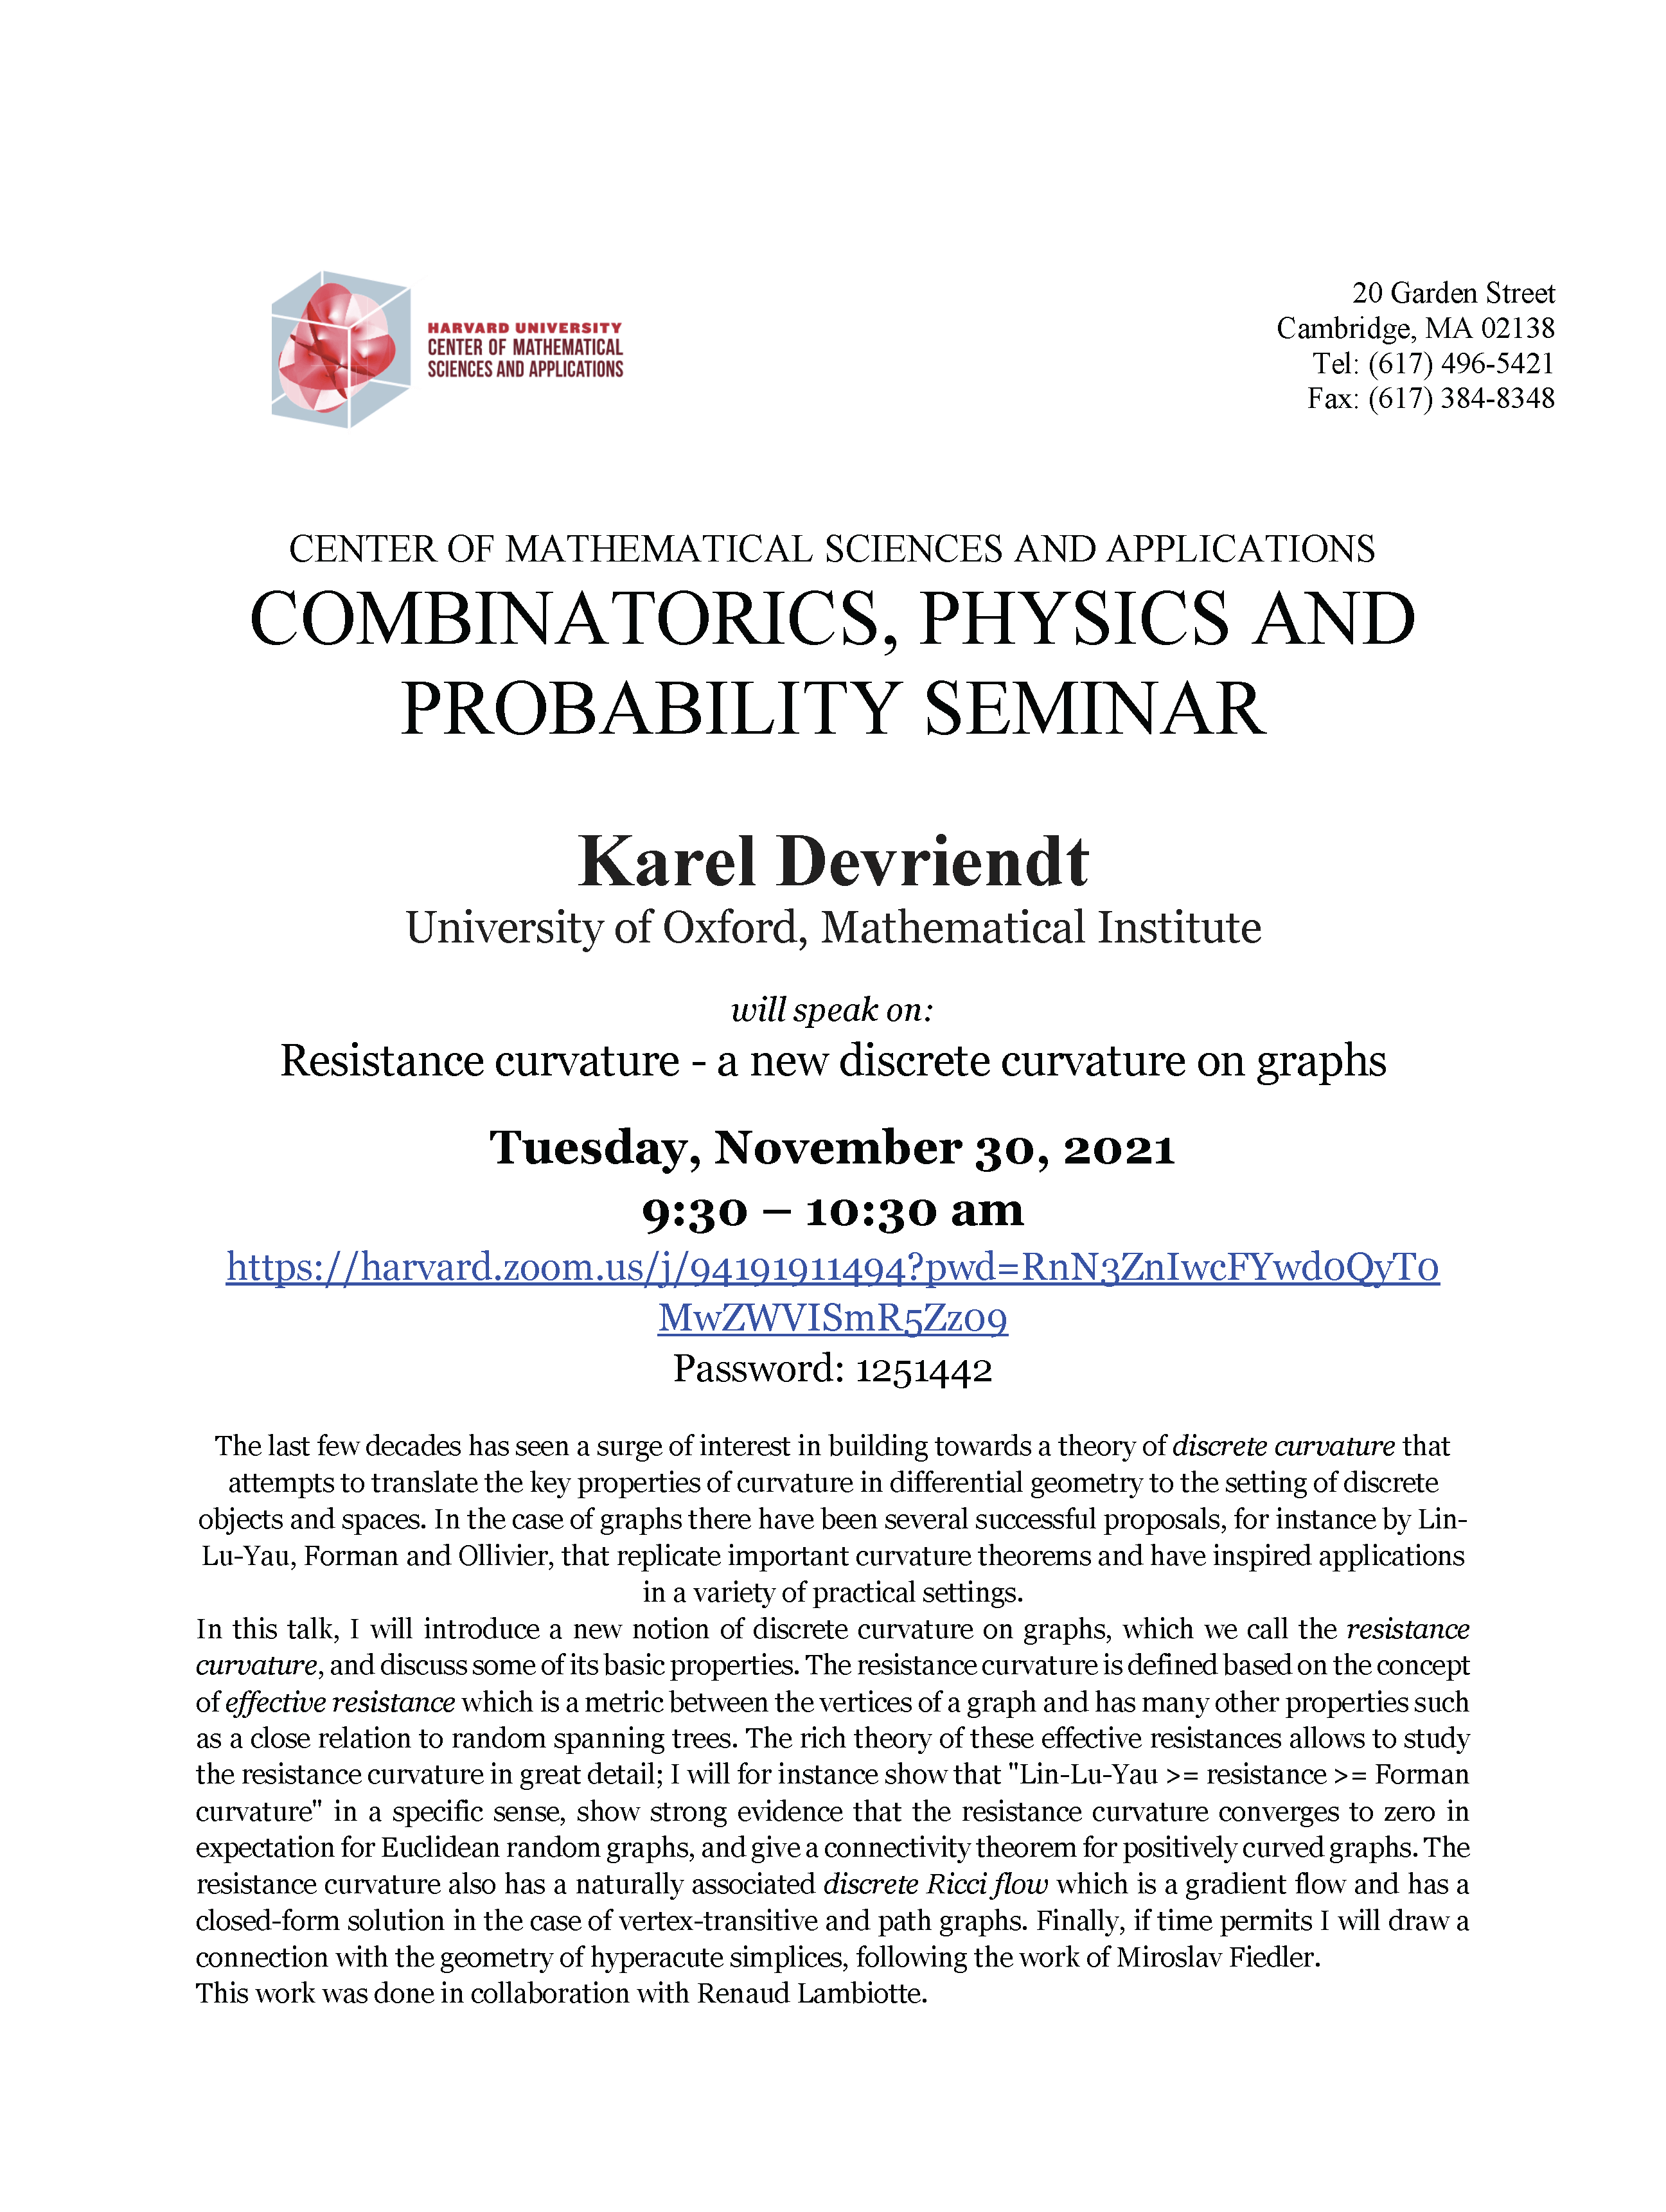 CMSA-Combinatorics-Physics-and-Probability-Seminar-11.30.2021